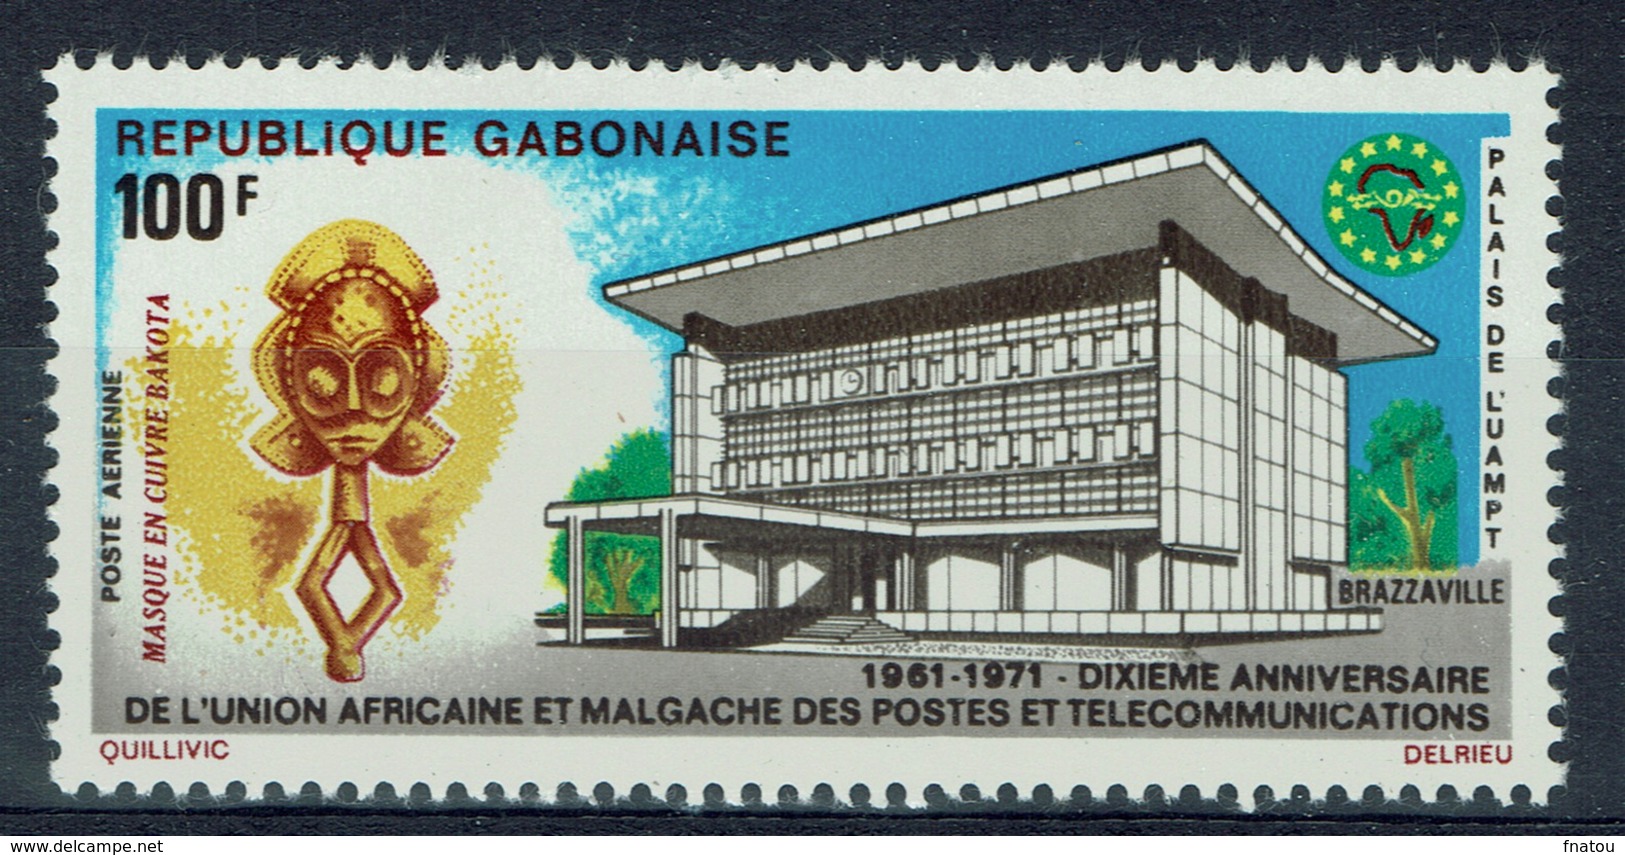 Gabon, UAMPT, 1971, MNH VF  airmail - Gabon (1960-...)